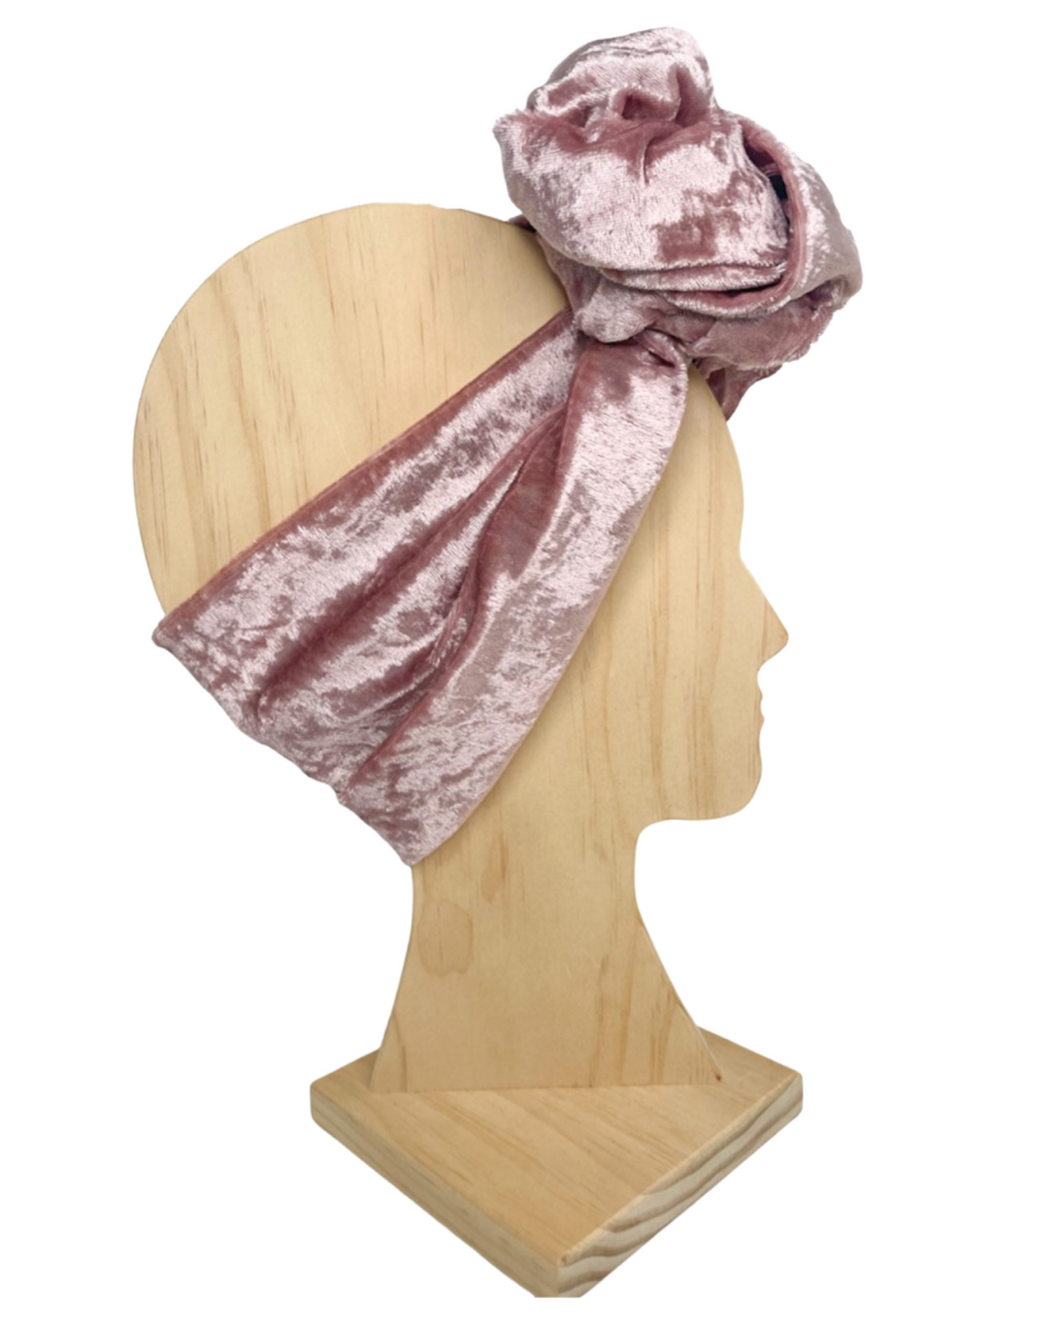 Dusty Pink Velvet - Boho Wire Headband - Handmade